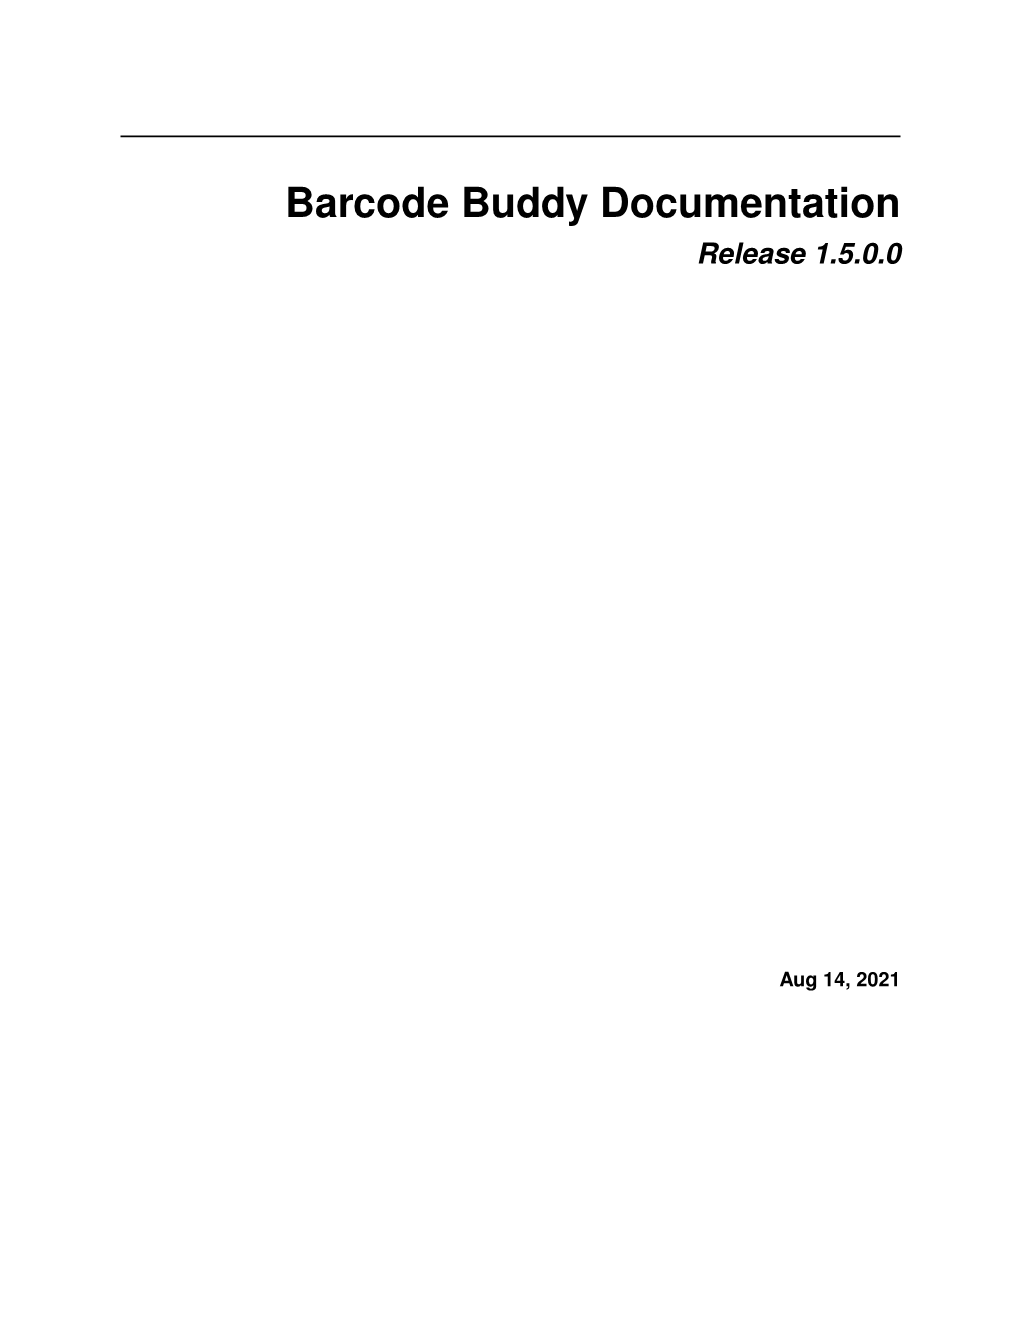 Barcode Buddy Documentation Release 1.5.0.0